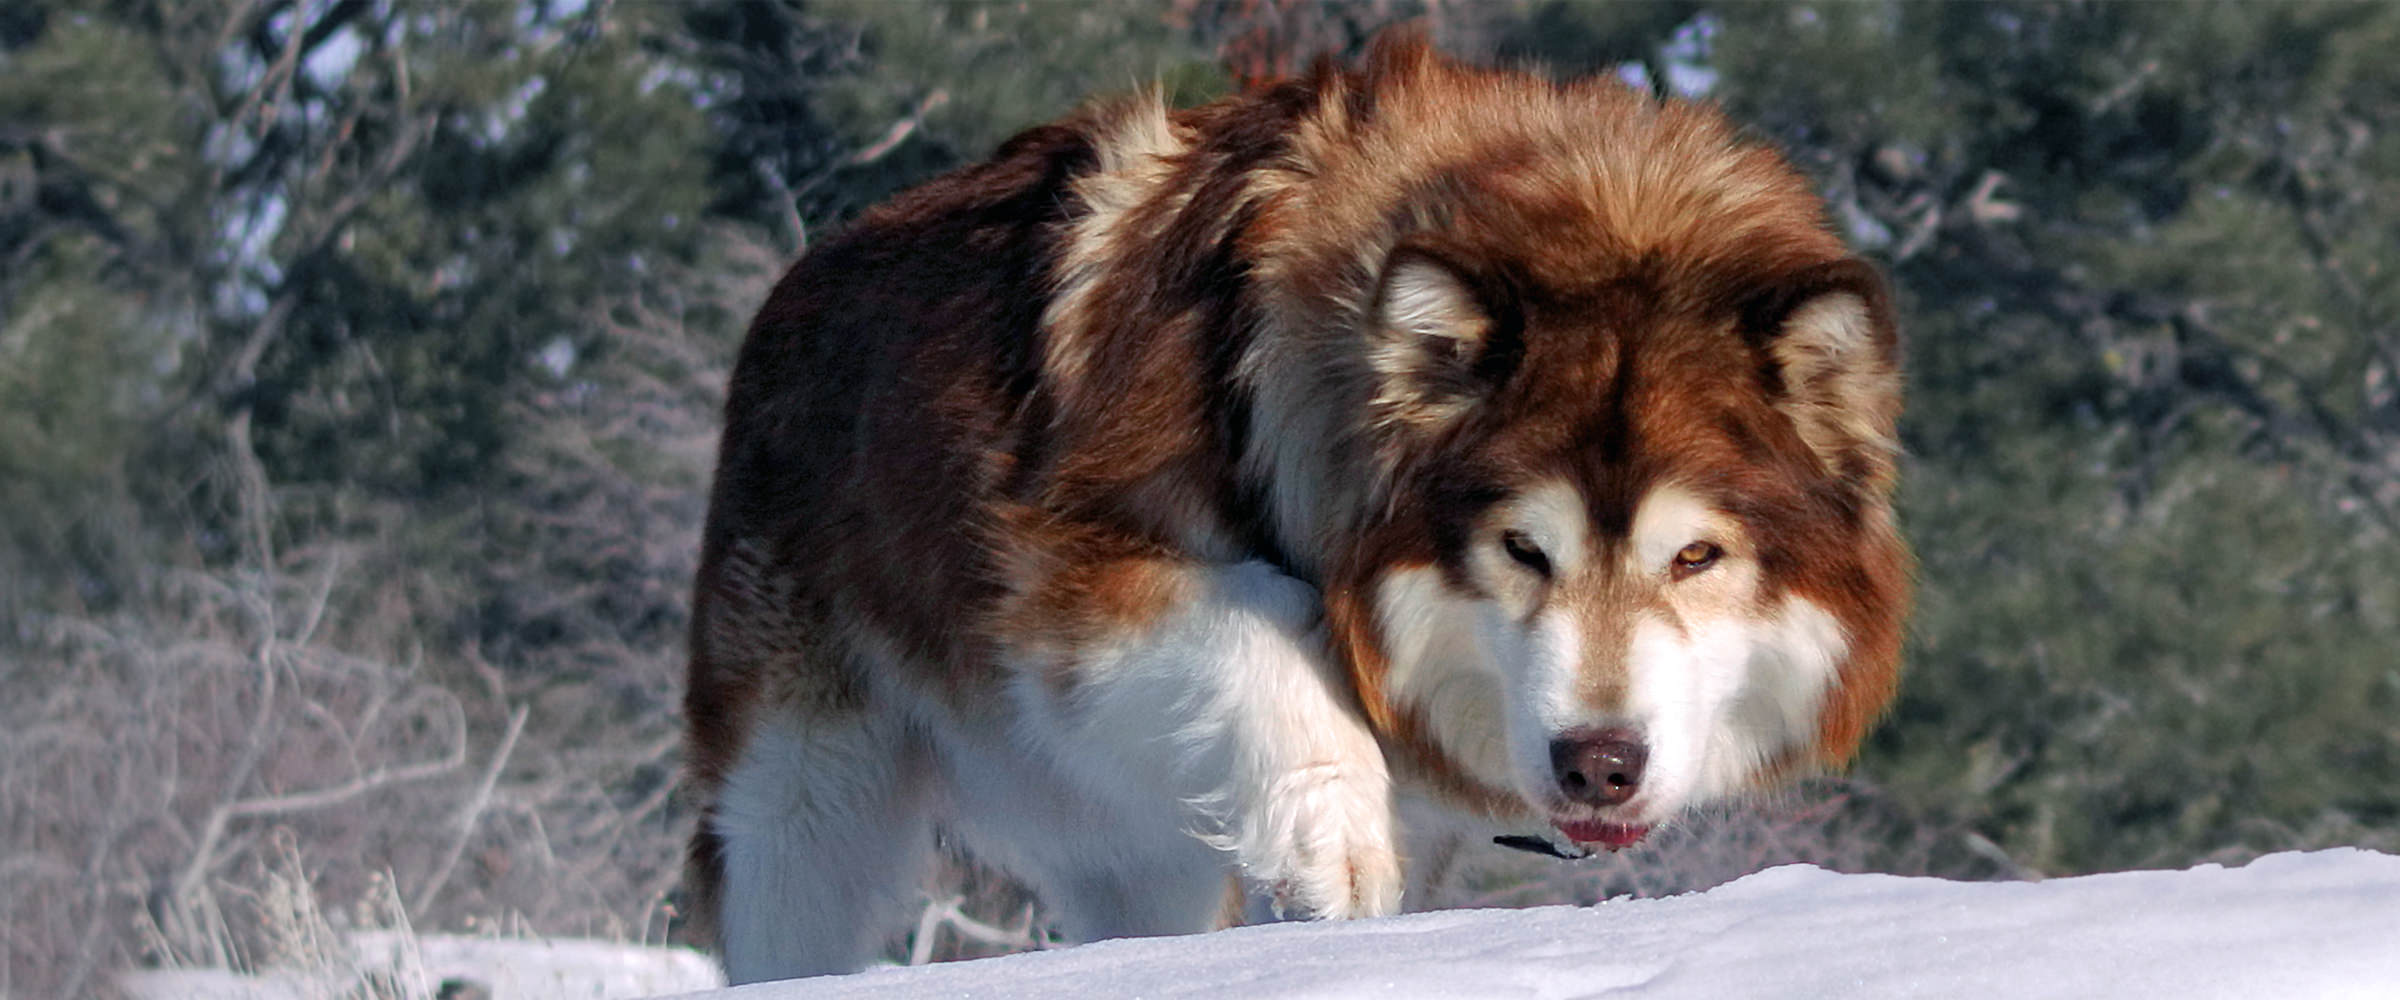 Snowlion world-renowned for beautiful red alaskan malamutes